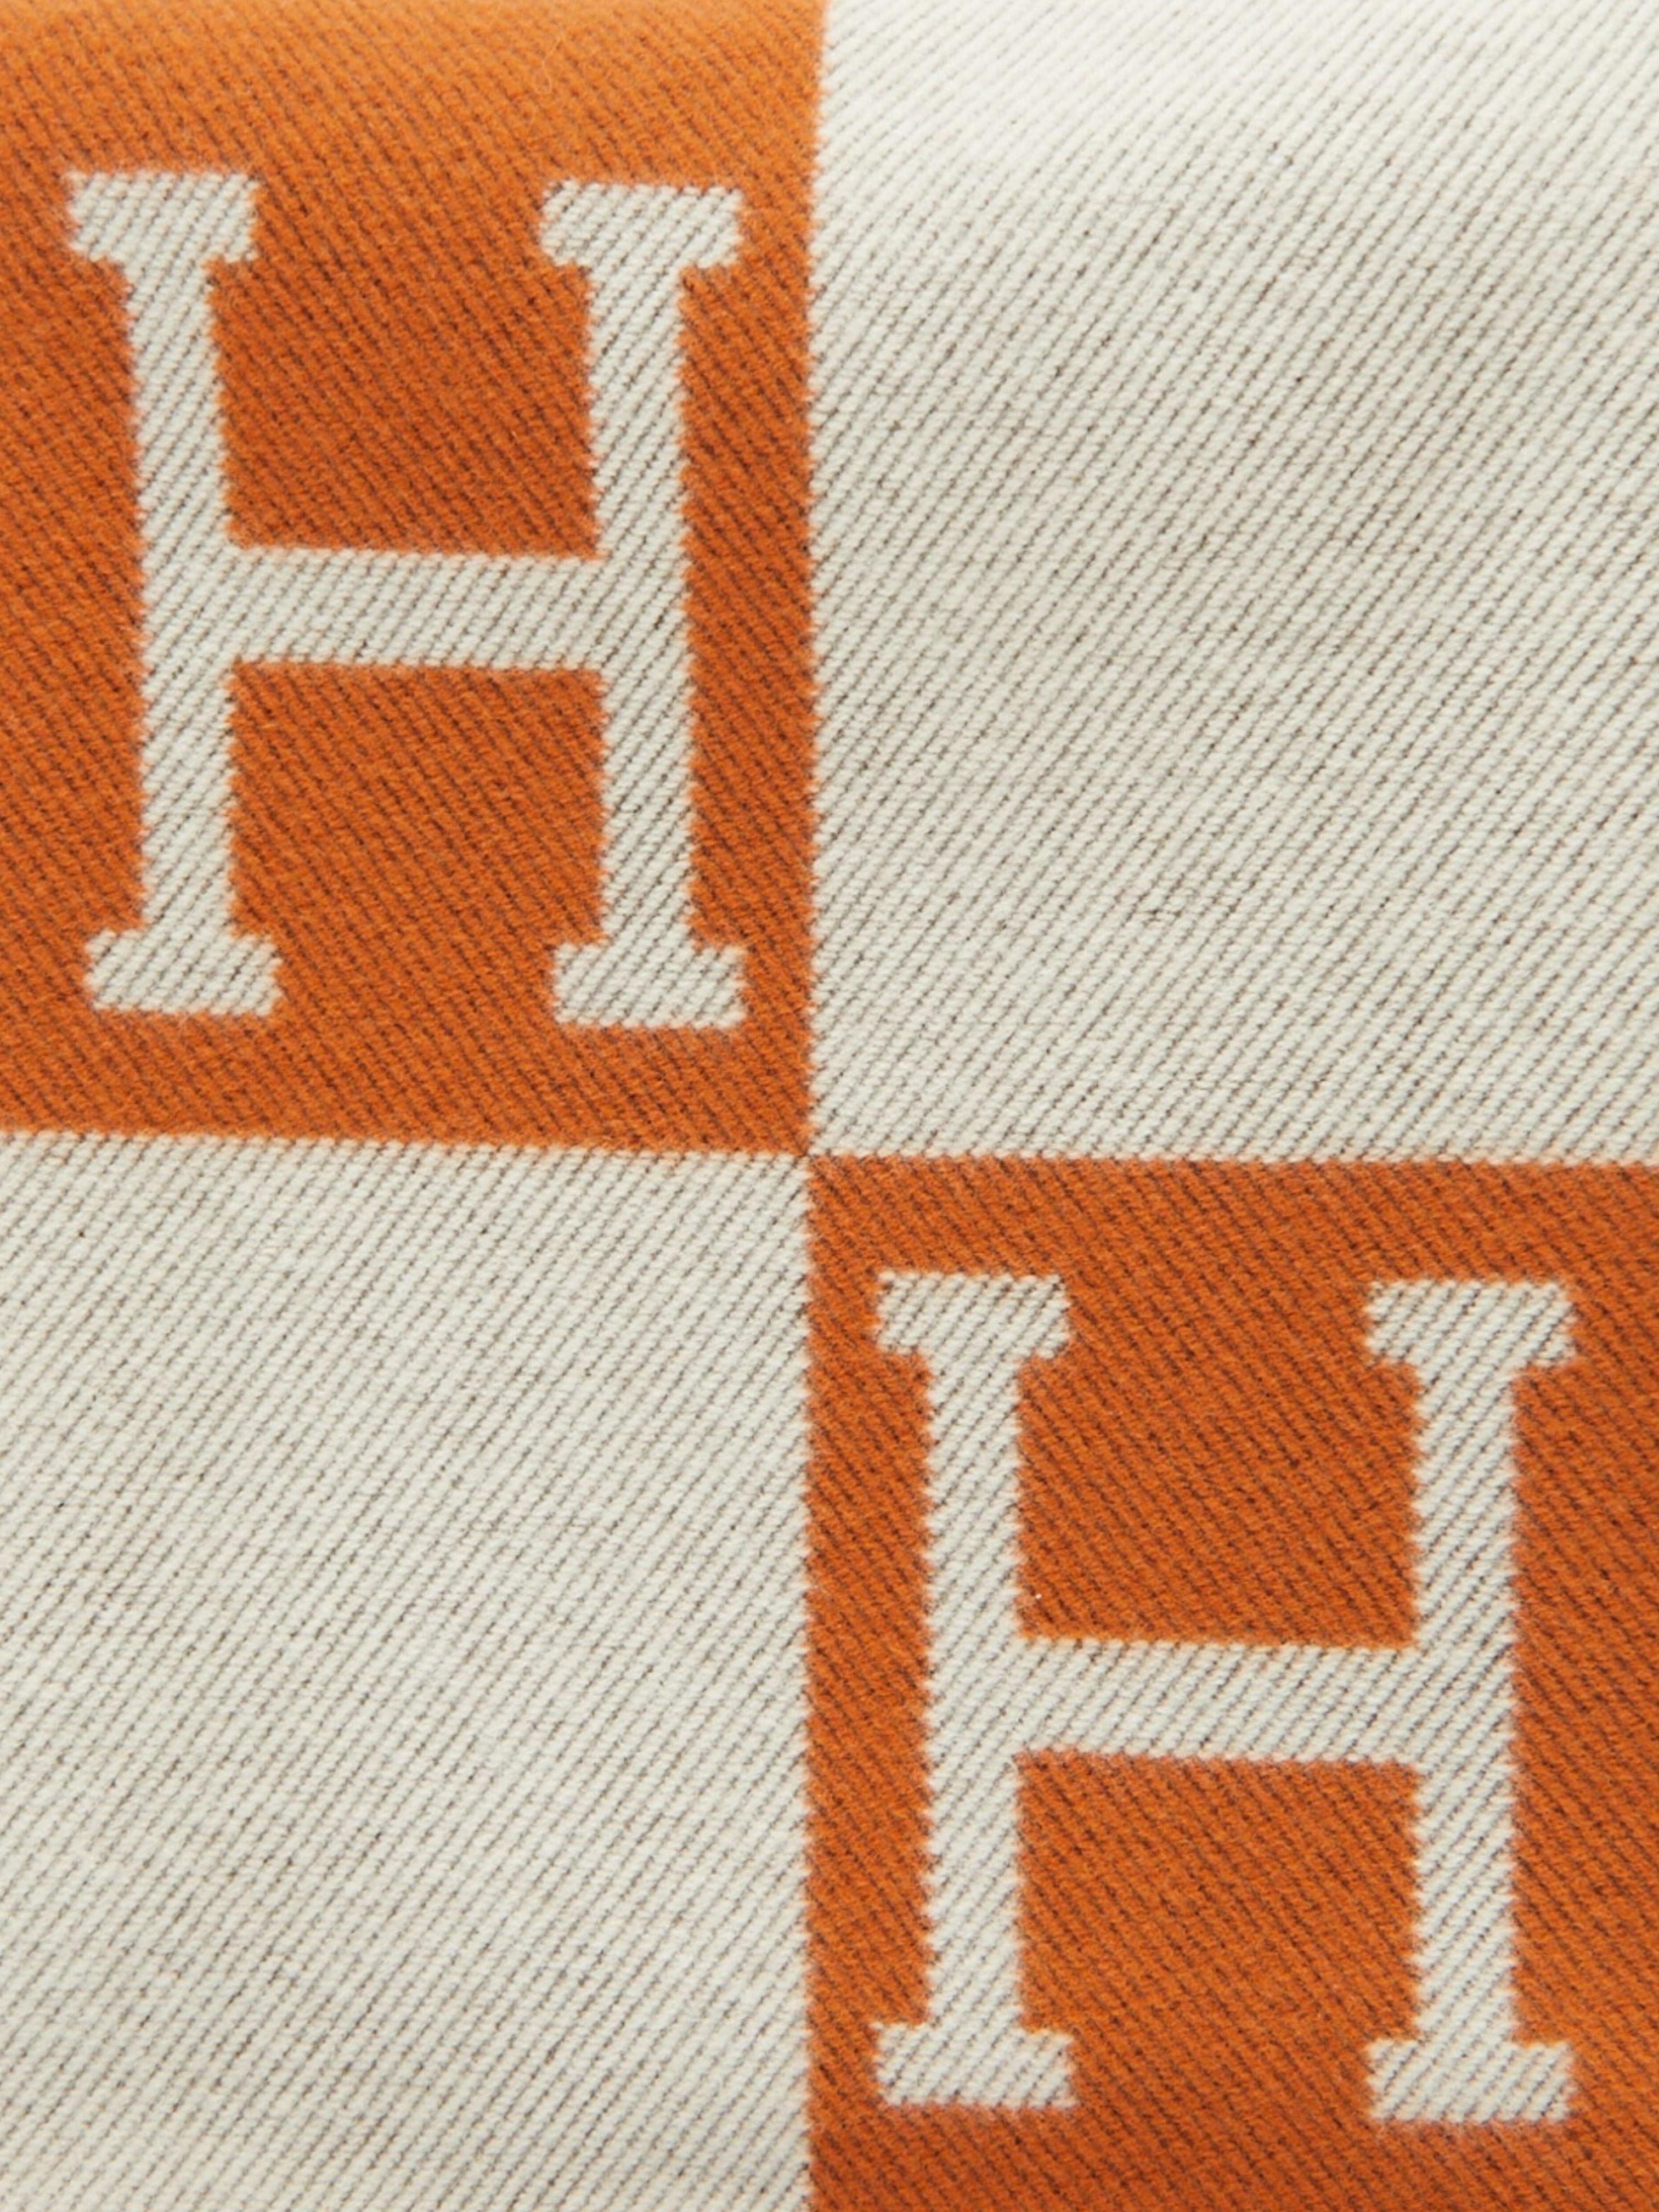 Hermès Avalon throw blanket in Merino wool and cashmere (90% Merino wool, 10% Cashmere)

Ecru/Poitron

Made in Great Britain

Dimensions: L 135 x H 170 cm 